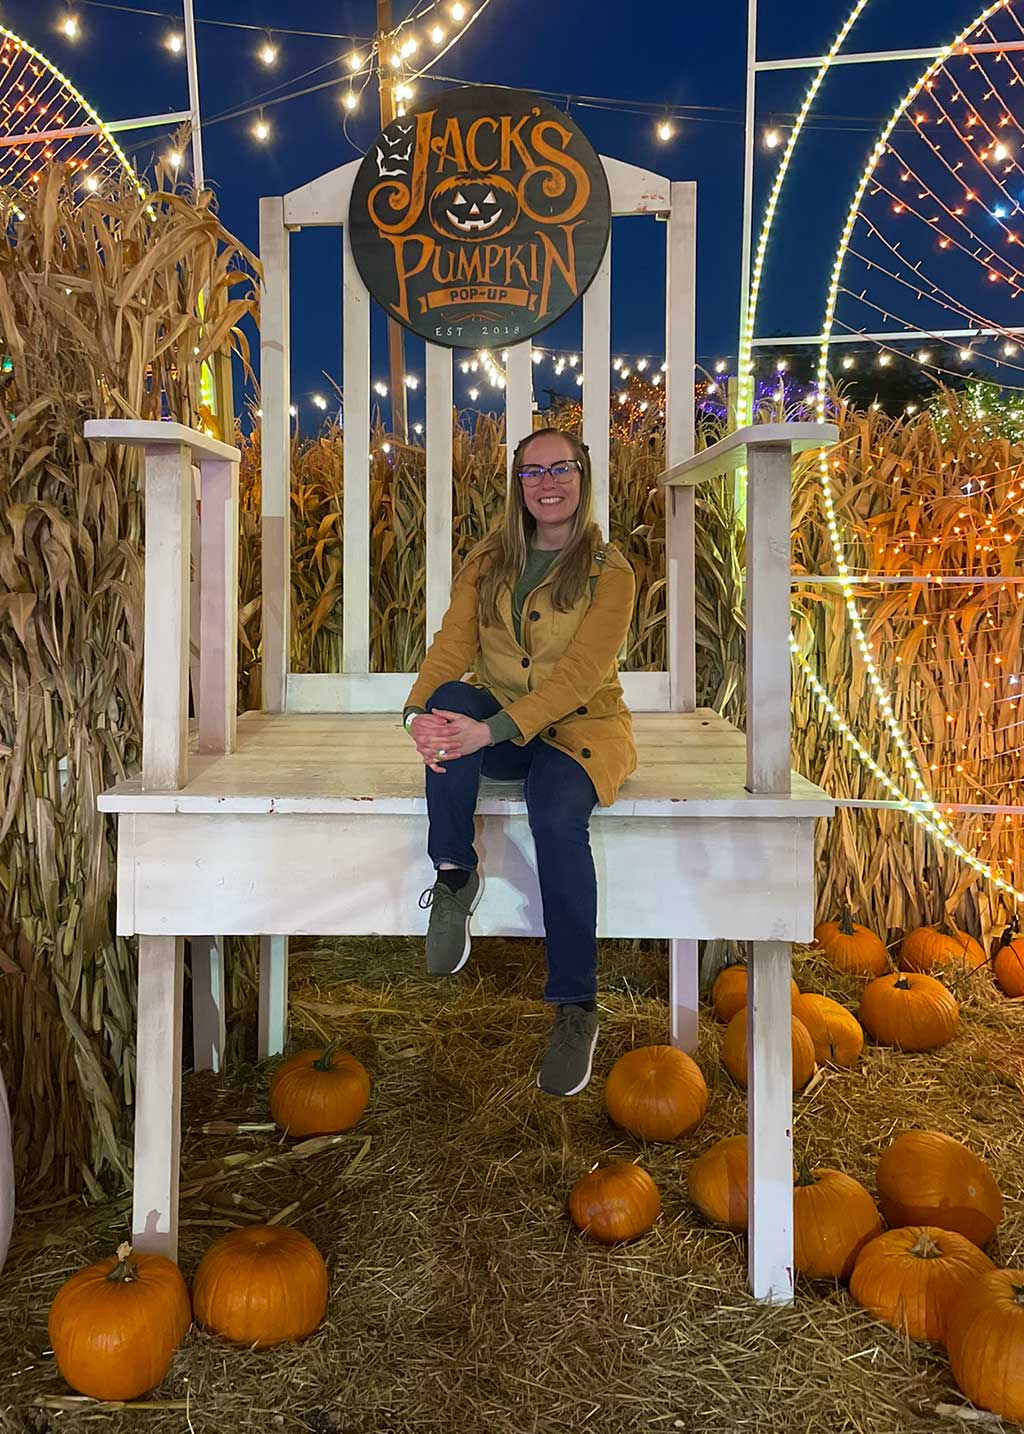 drive-swim-fly-chicago-illinois-jacks-pumpkin-pop-up-pumpkin-patch-selfie-giant-white-chair